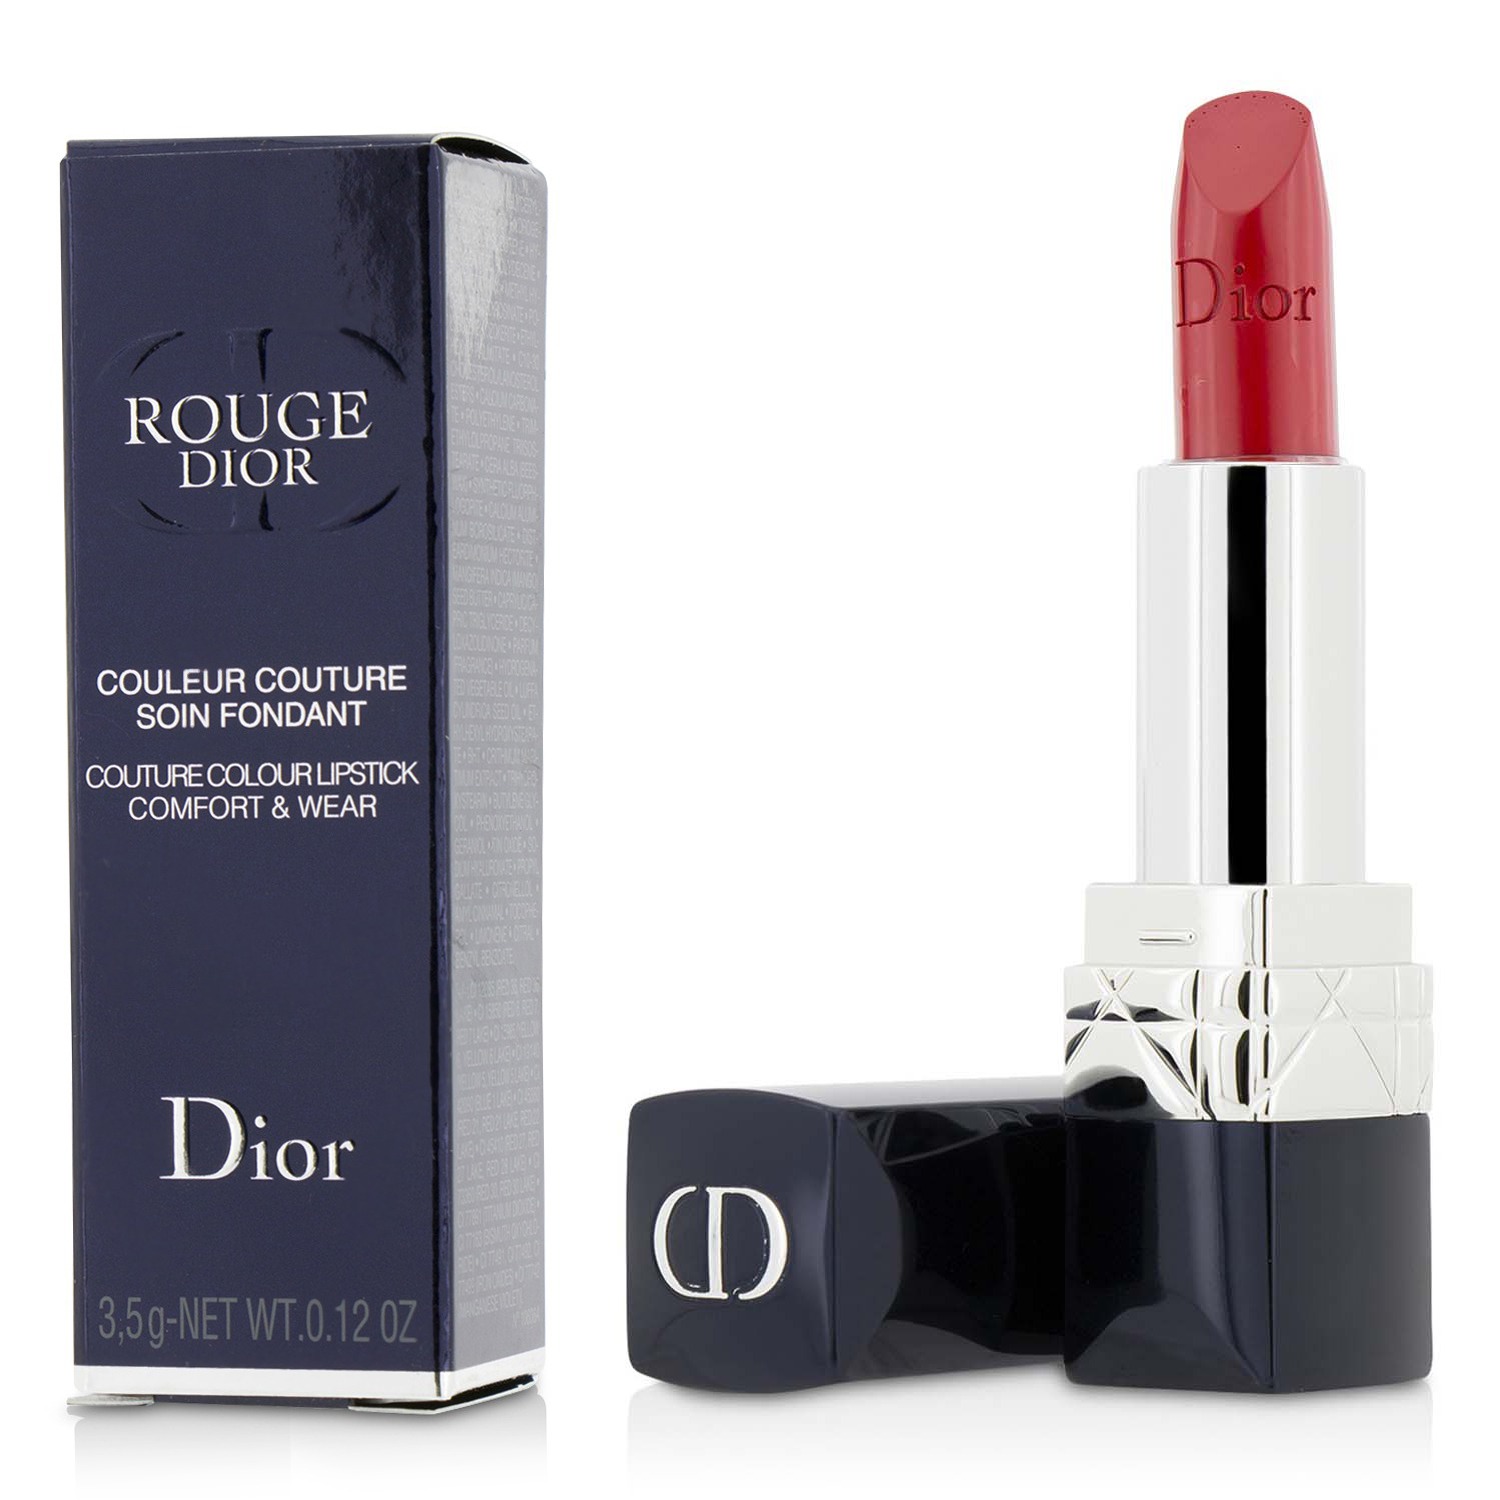 Rouge Dior Couture Colour Comfort & Wear Lipstick - # 854 Concorde Christian Dior Image